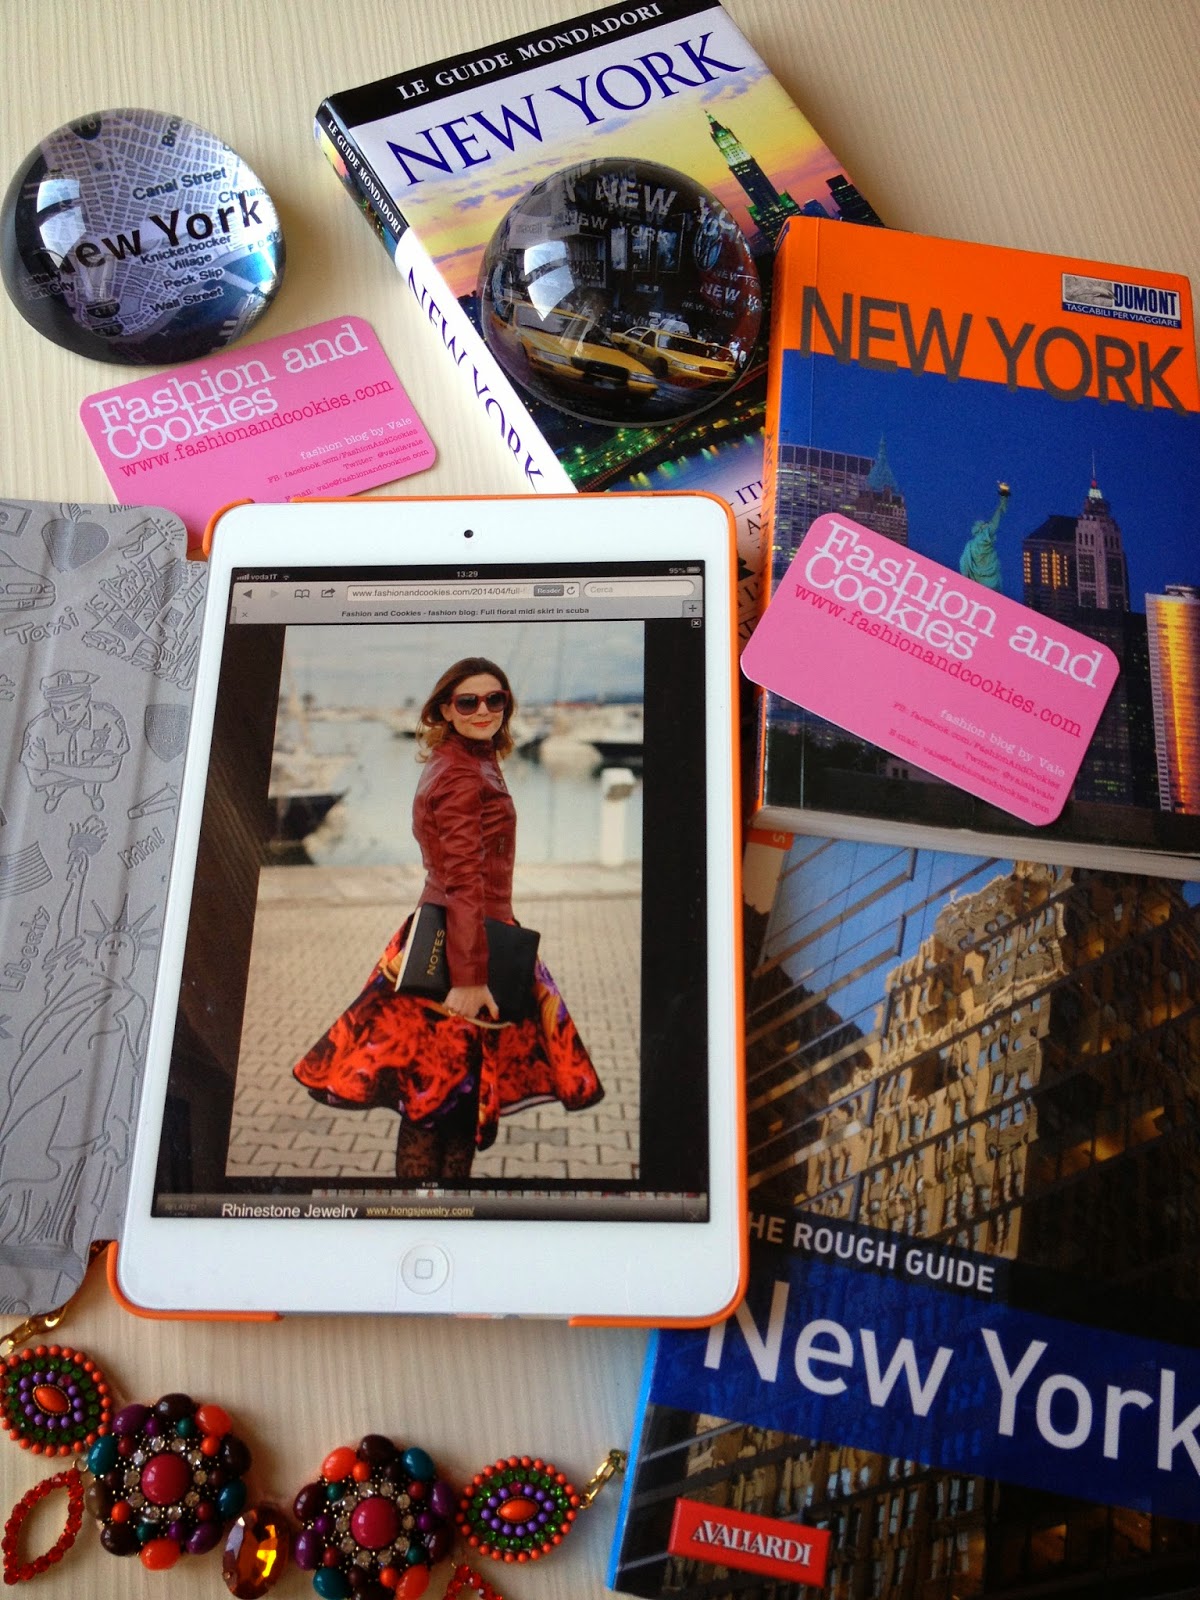 Ozaki New York travel iPad mini case, Ozaki travel ipad case, Fashion and Cookies, fashion blogger, L10Trading